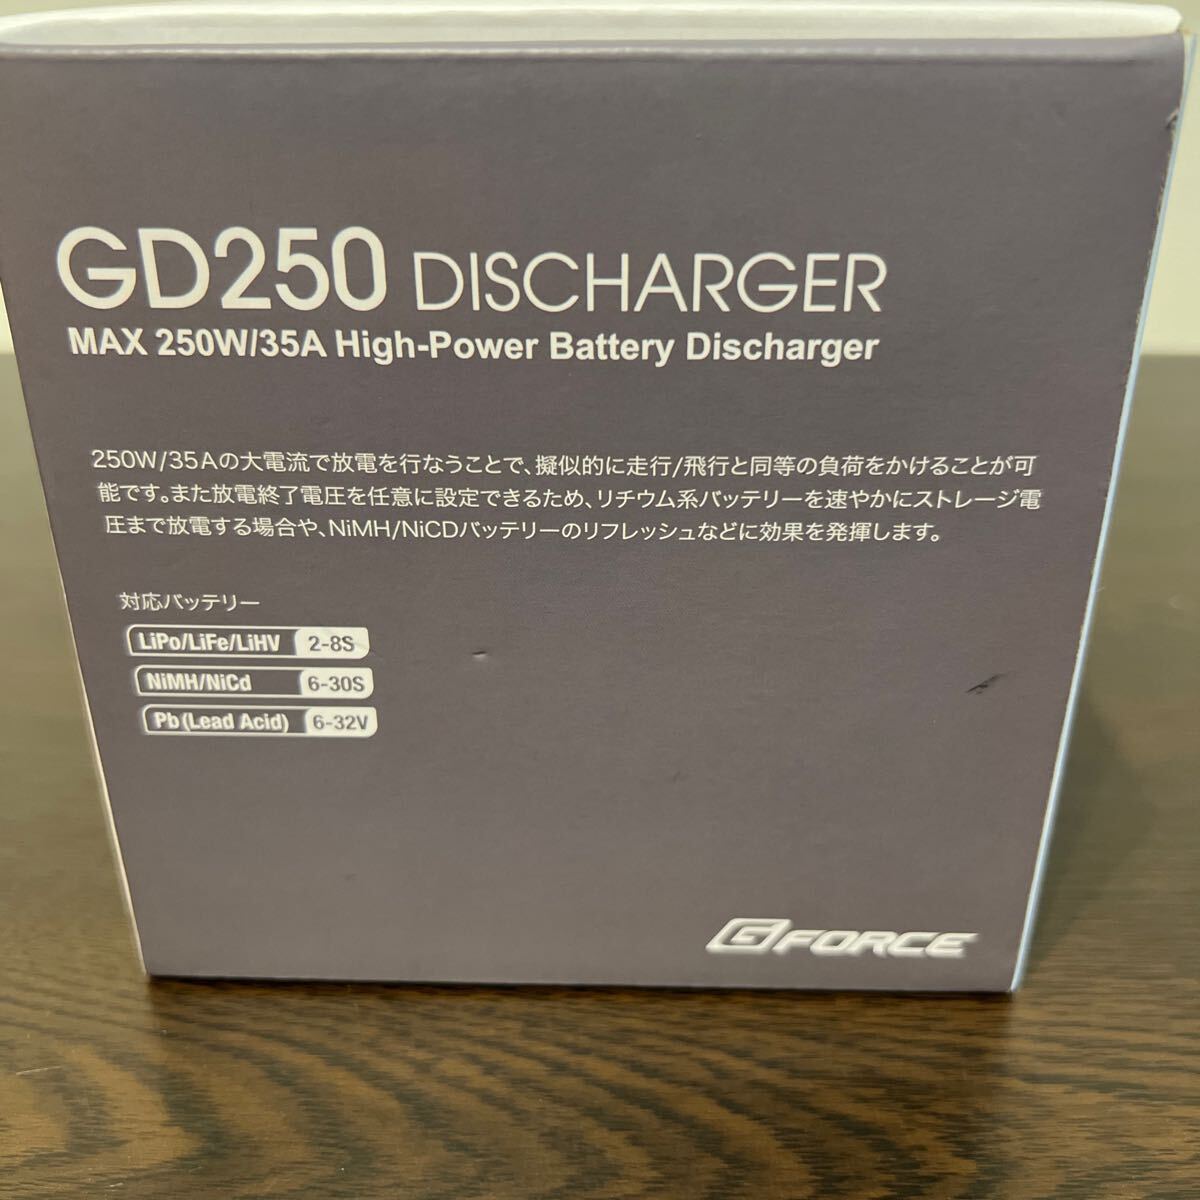  used beautiful goods!ji- force discharge machine GD250 discharge .-250W discharge vessel Discharger G0317